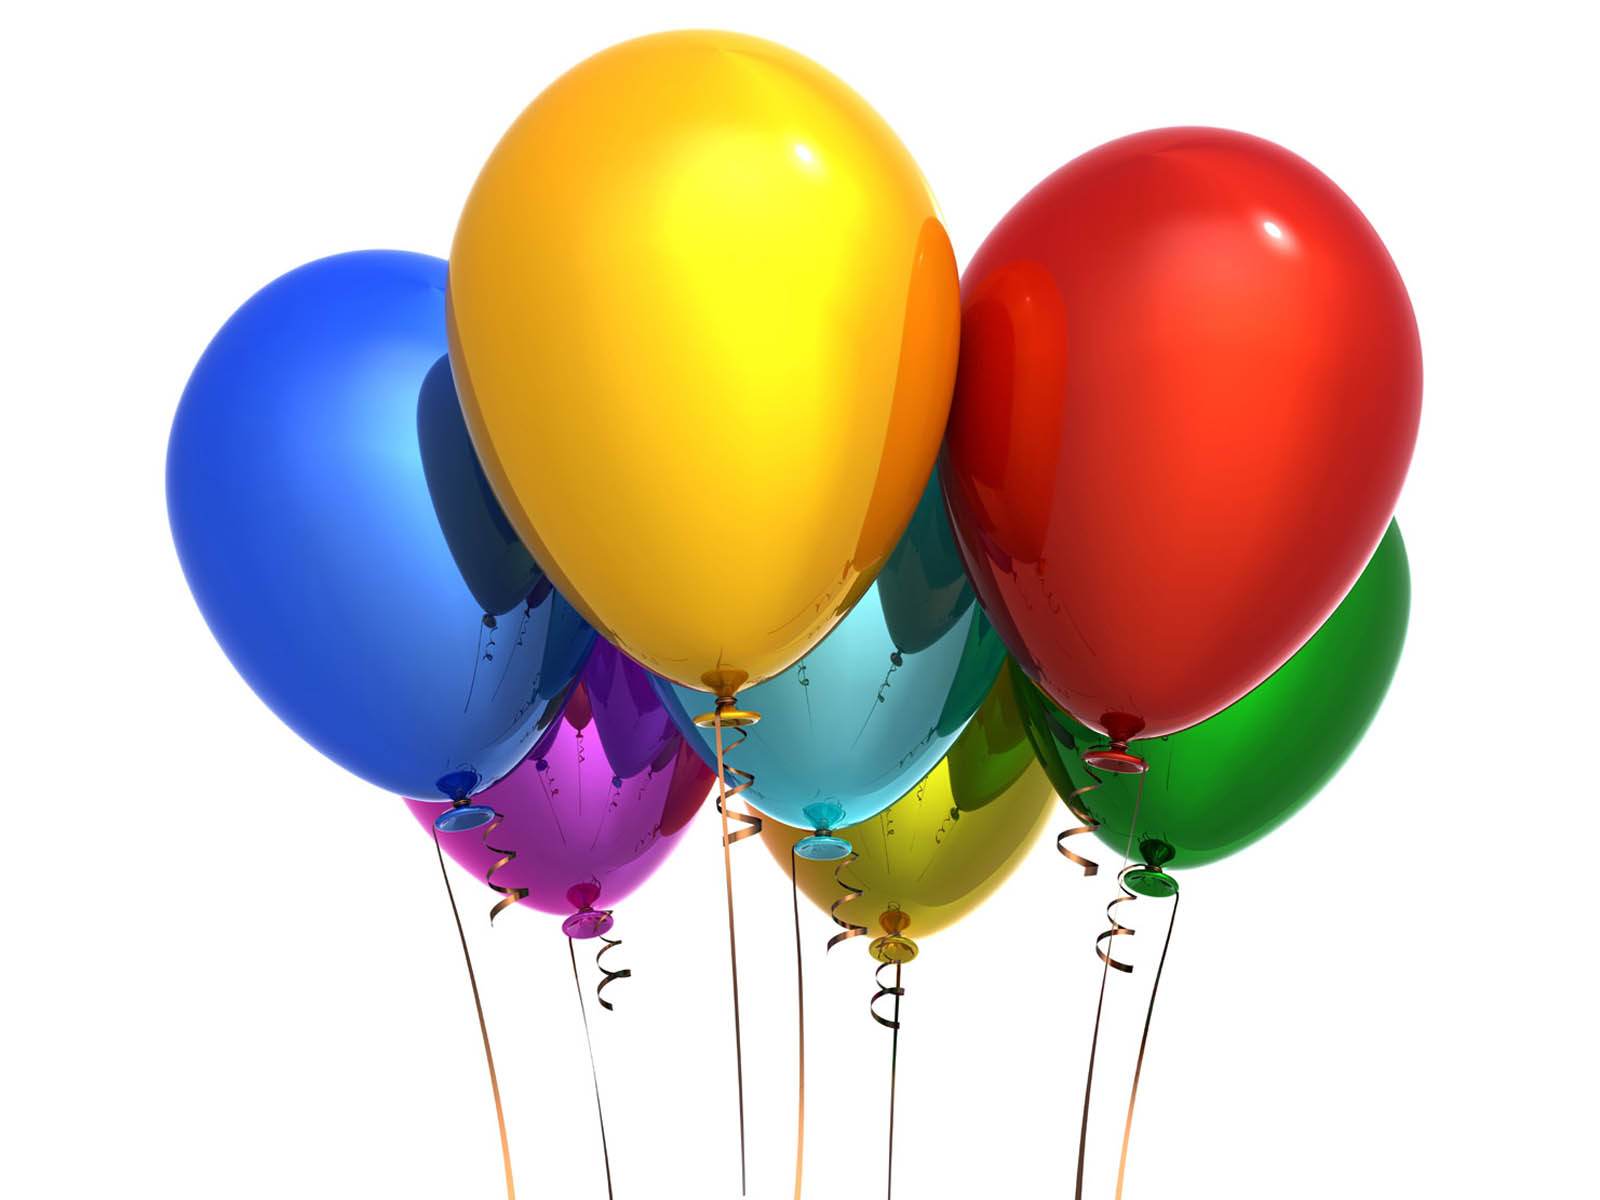 Happy birthday balloons wallpaper - HD Widescreen Backgrounds